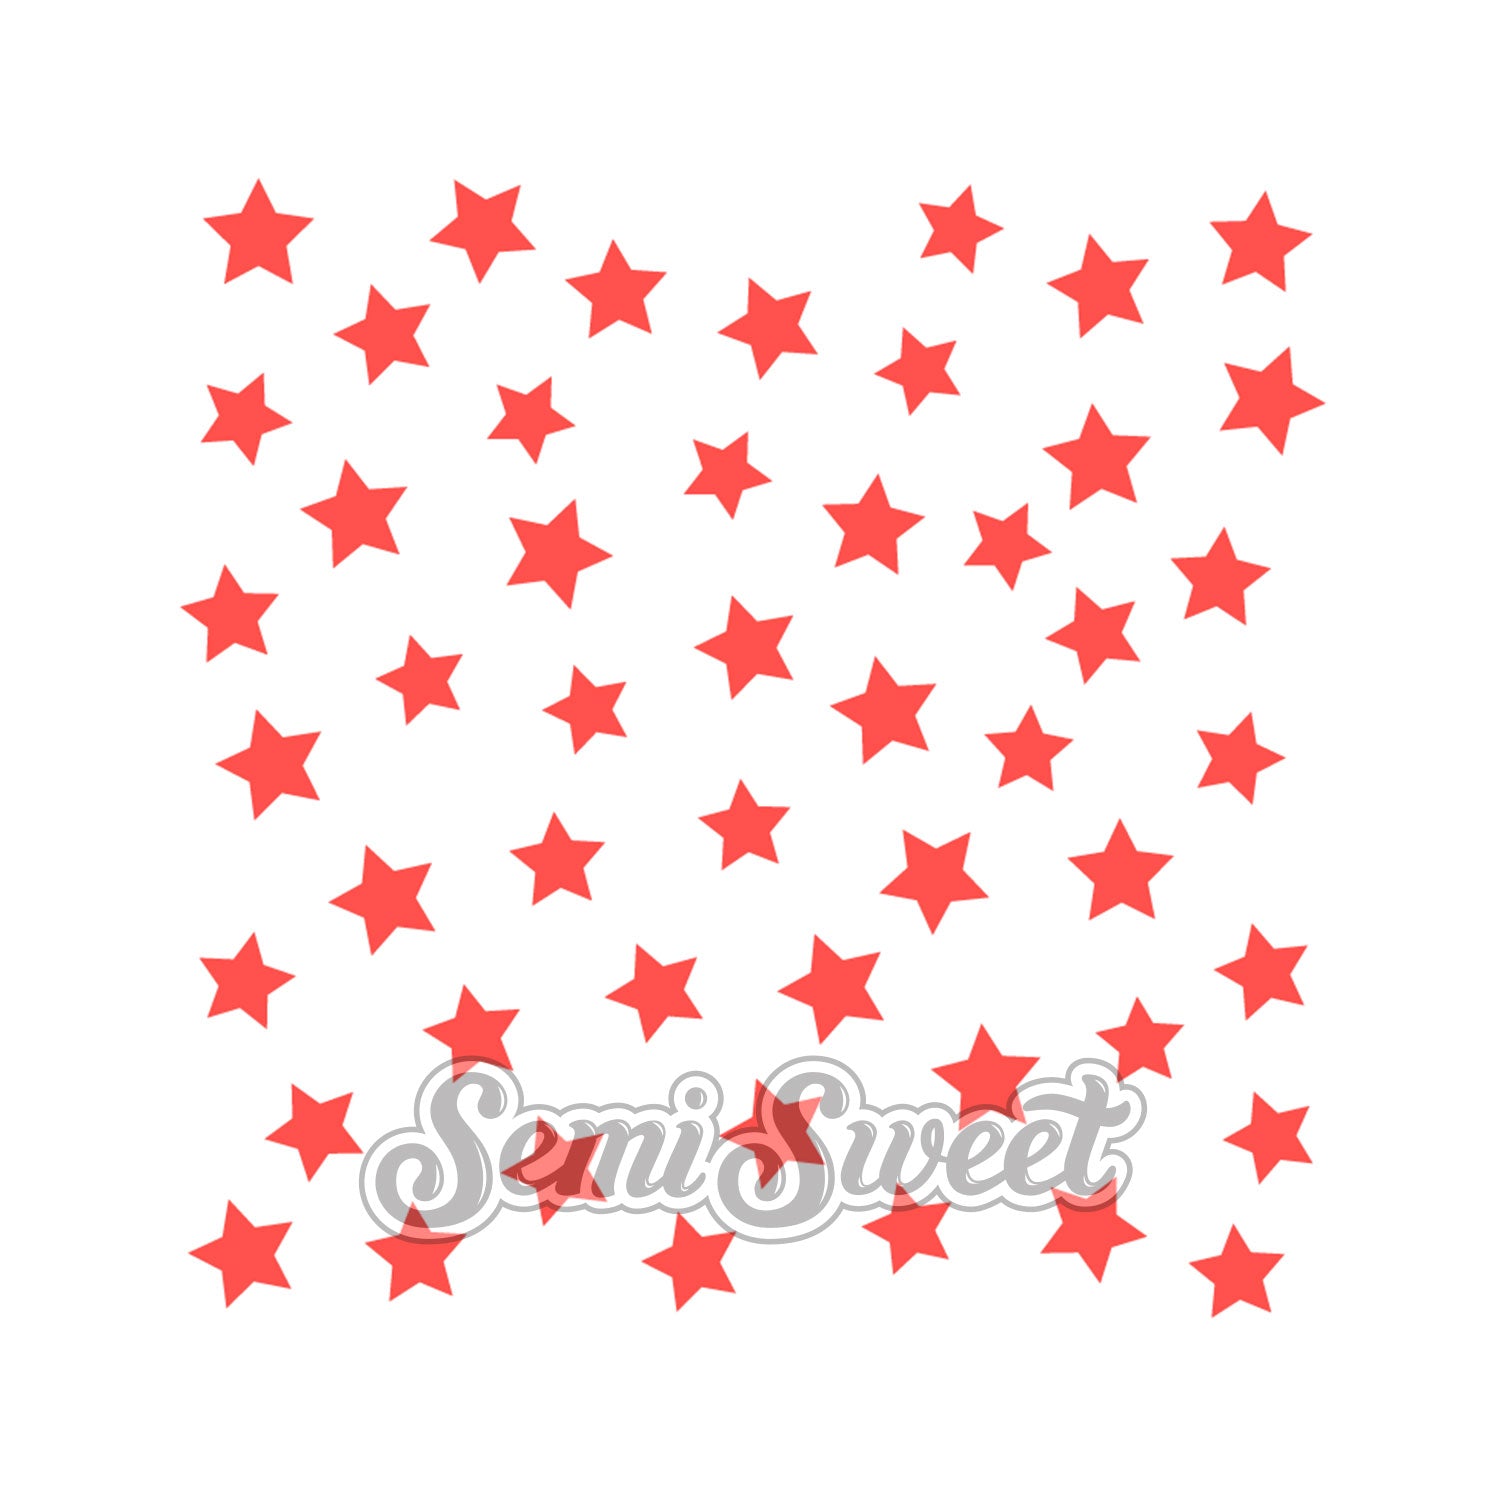 Scattered Stars Stencil